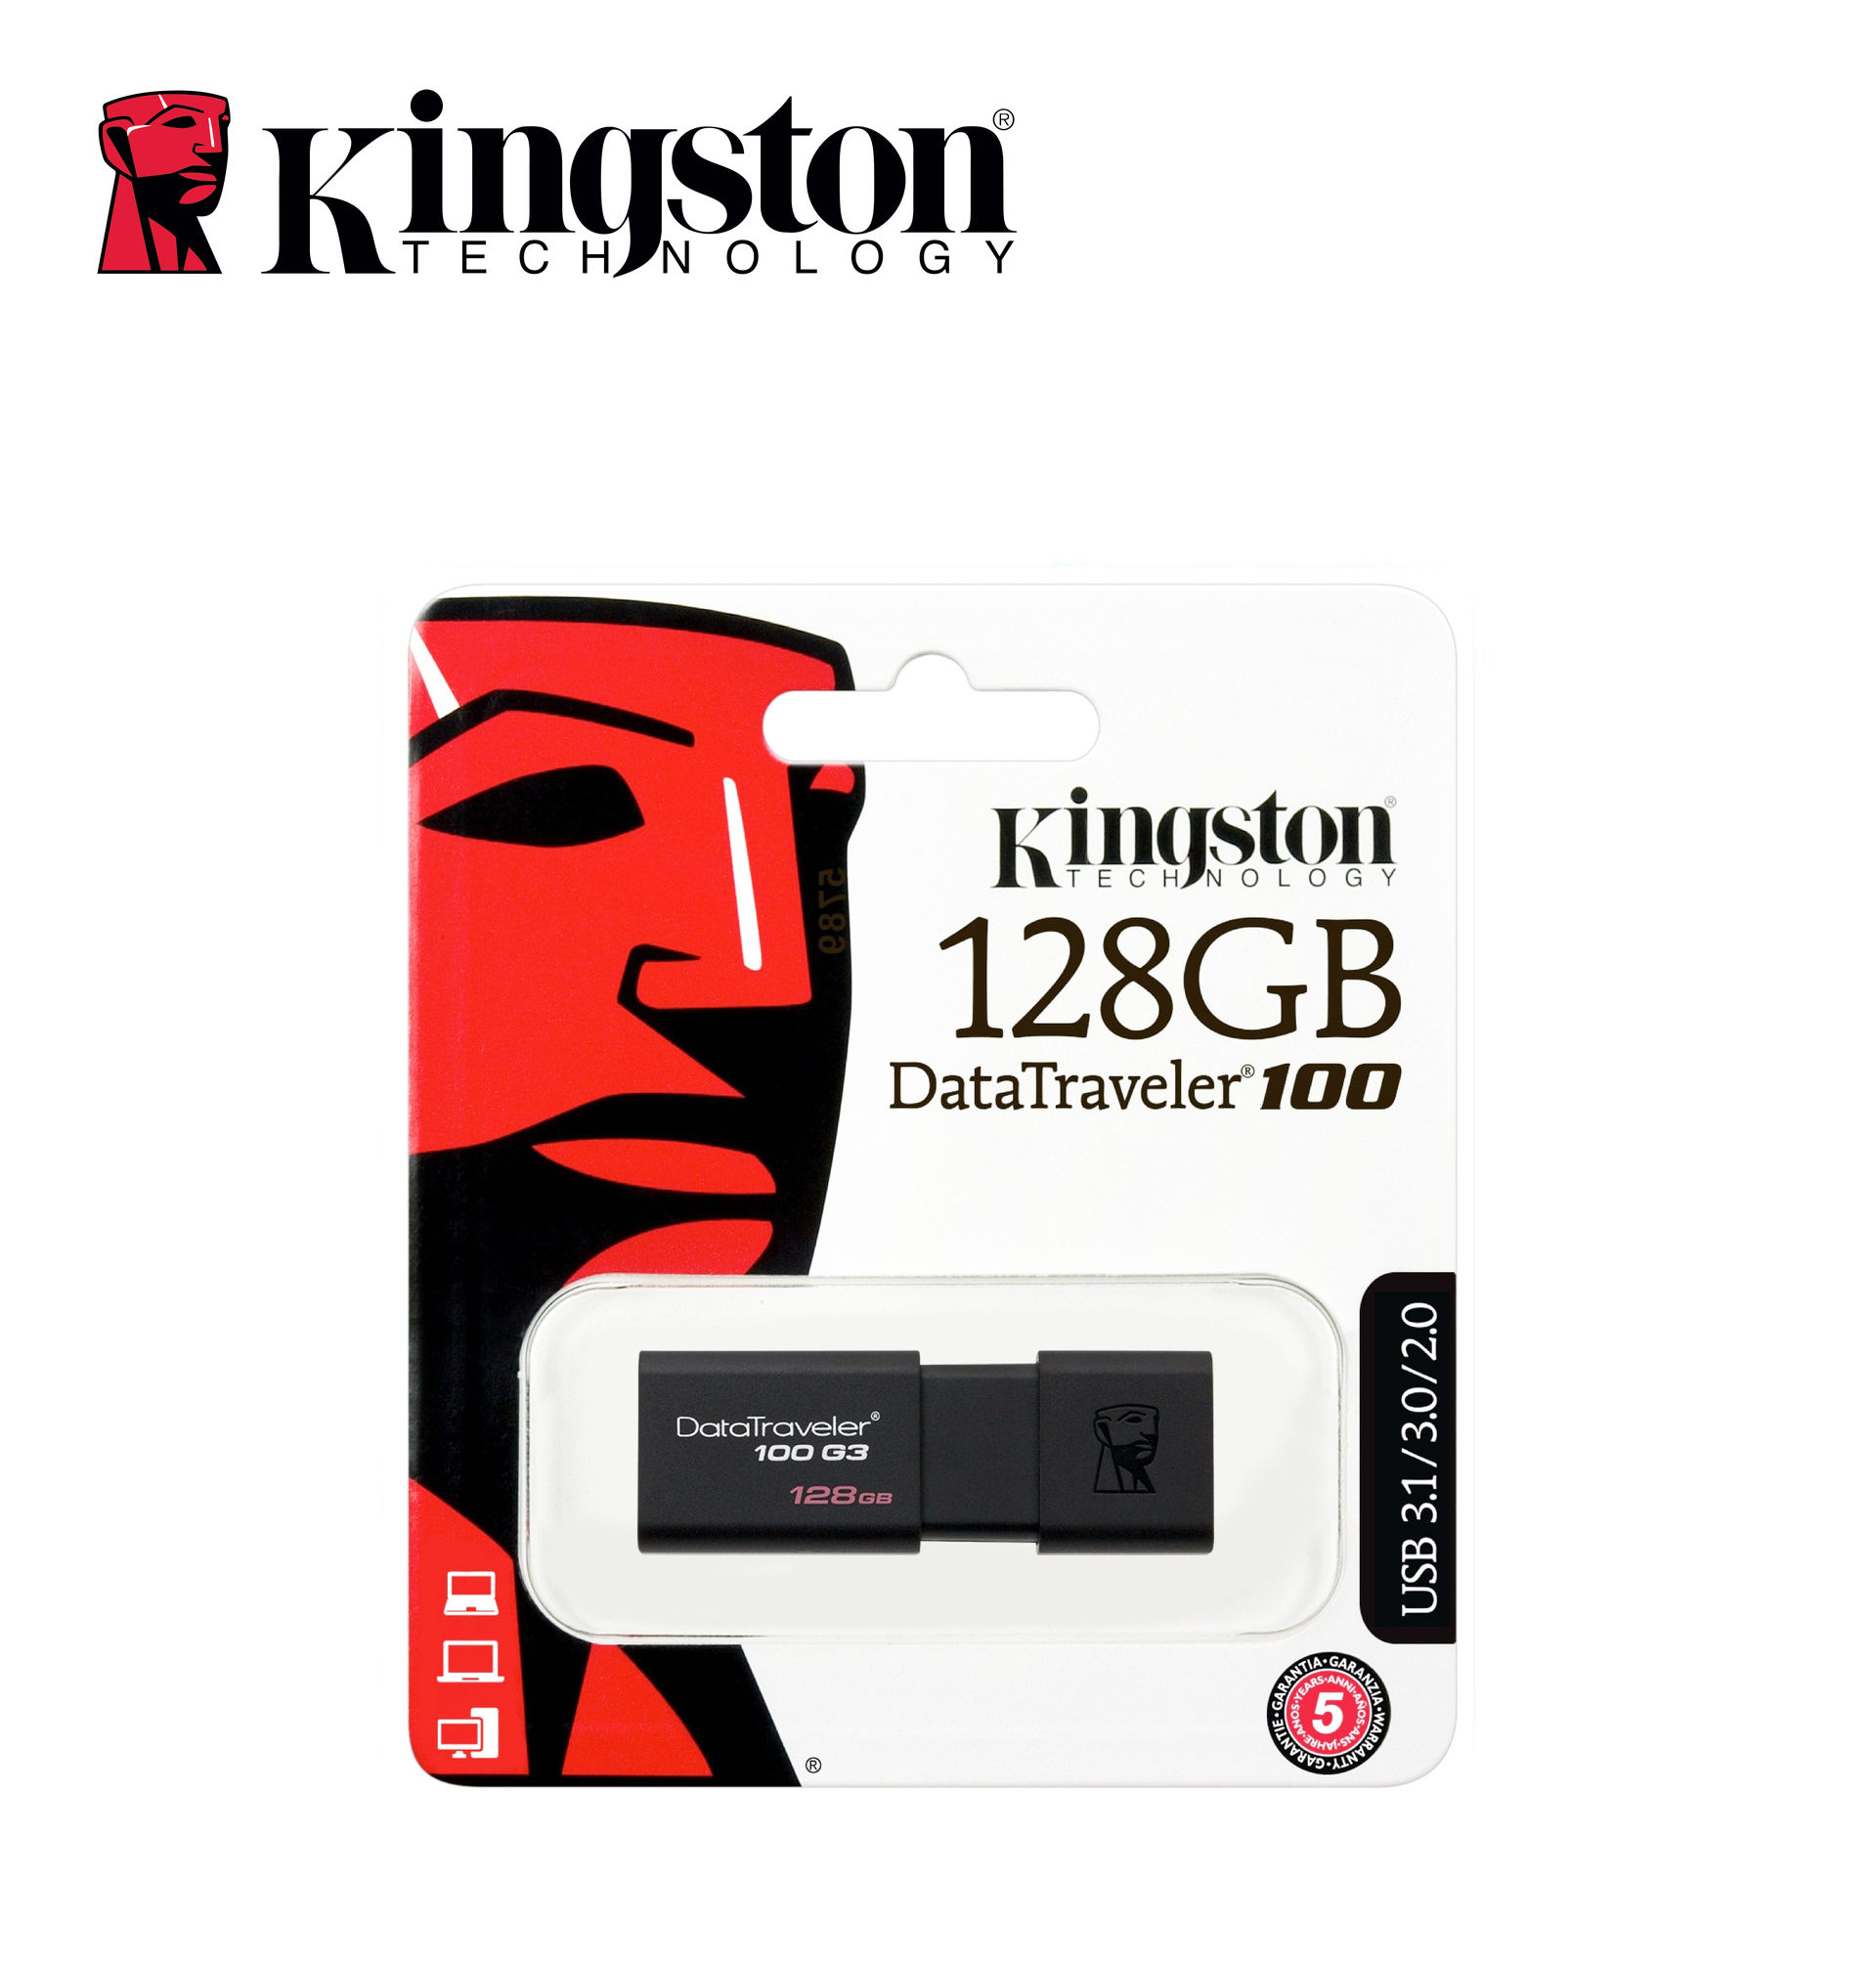 KINGSTONE PEN DRIVE G3 128GBKingston